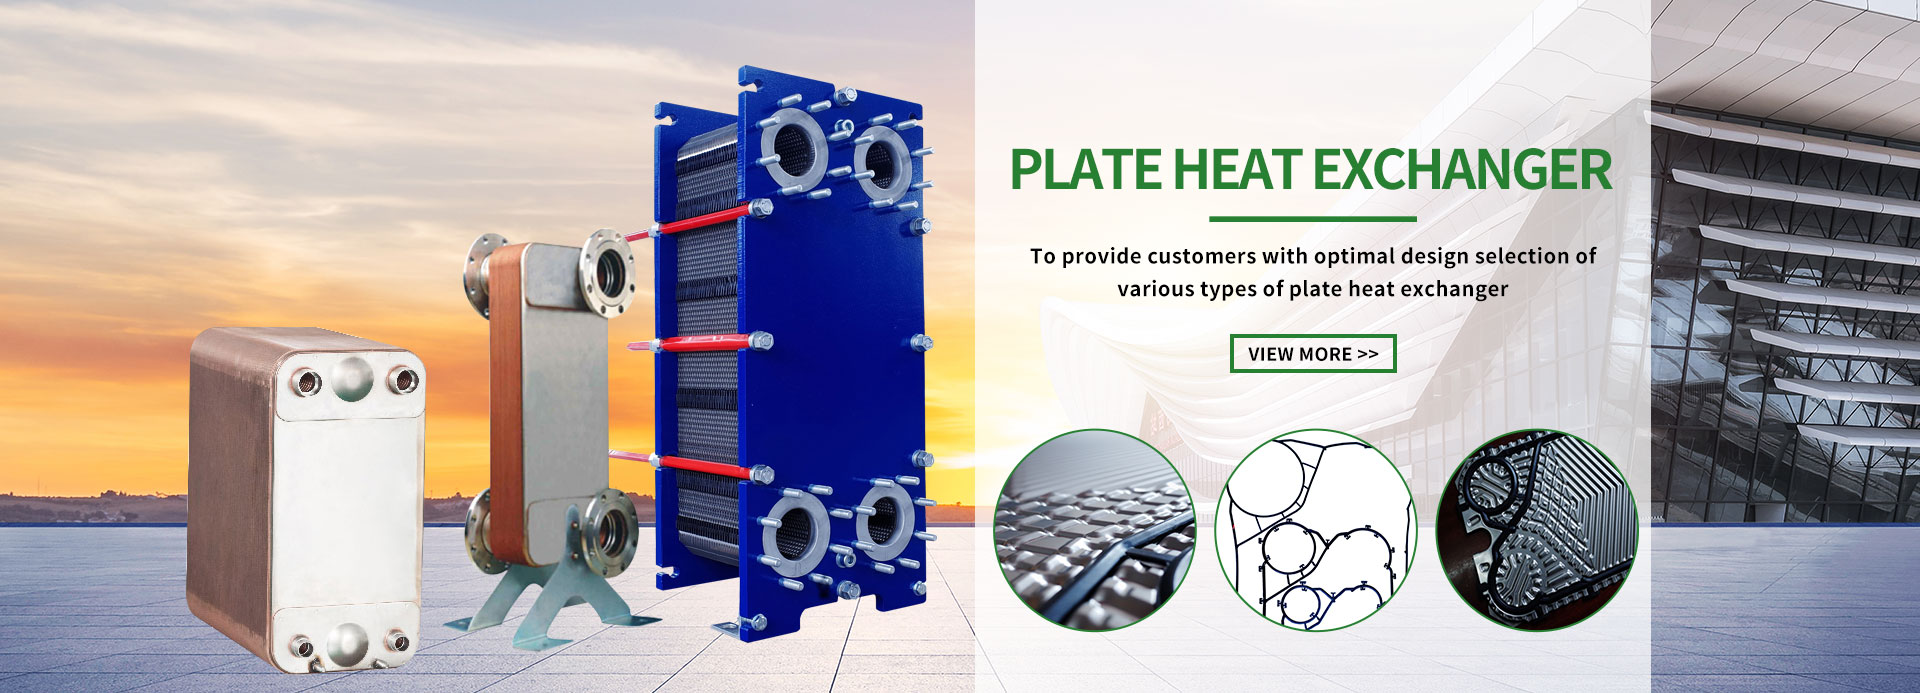 Plate Heat Exchanger ထုတ်လုပ်သူများ